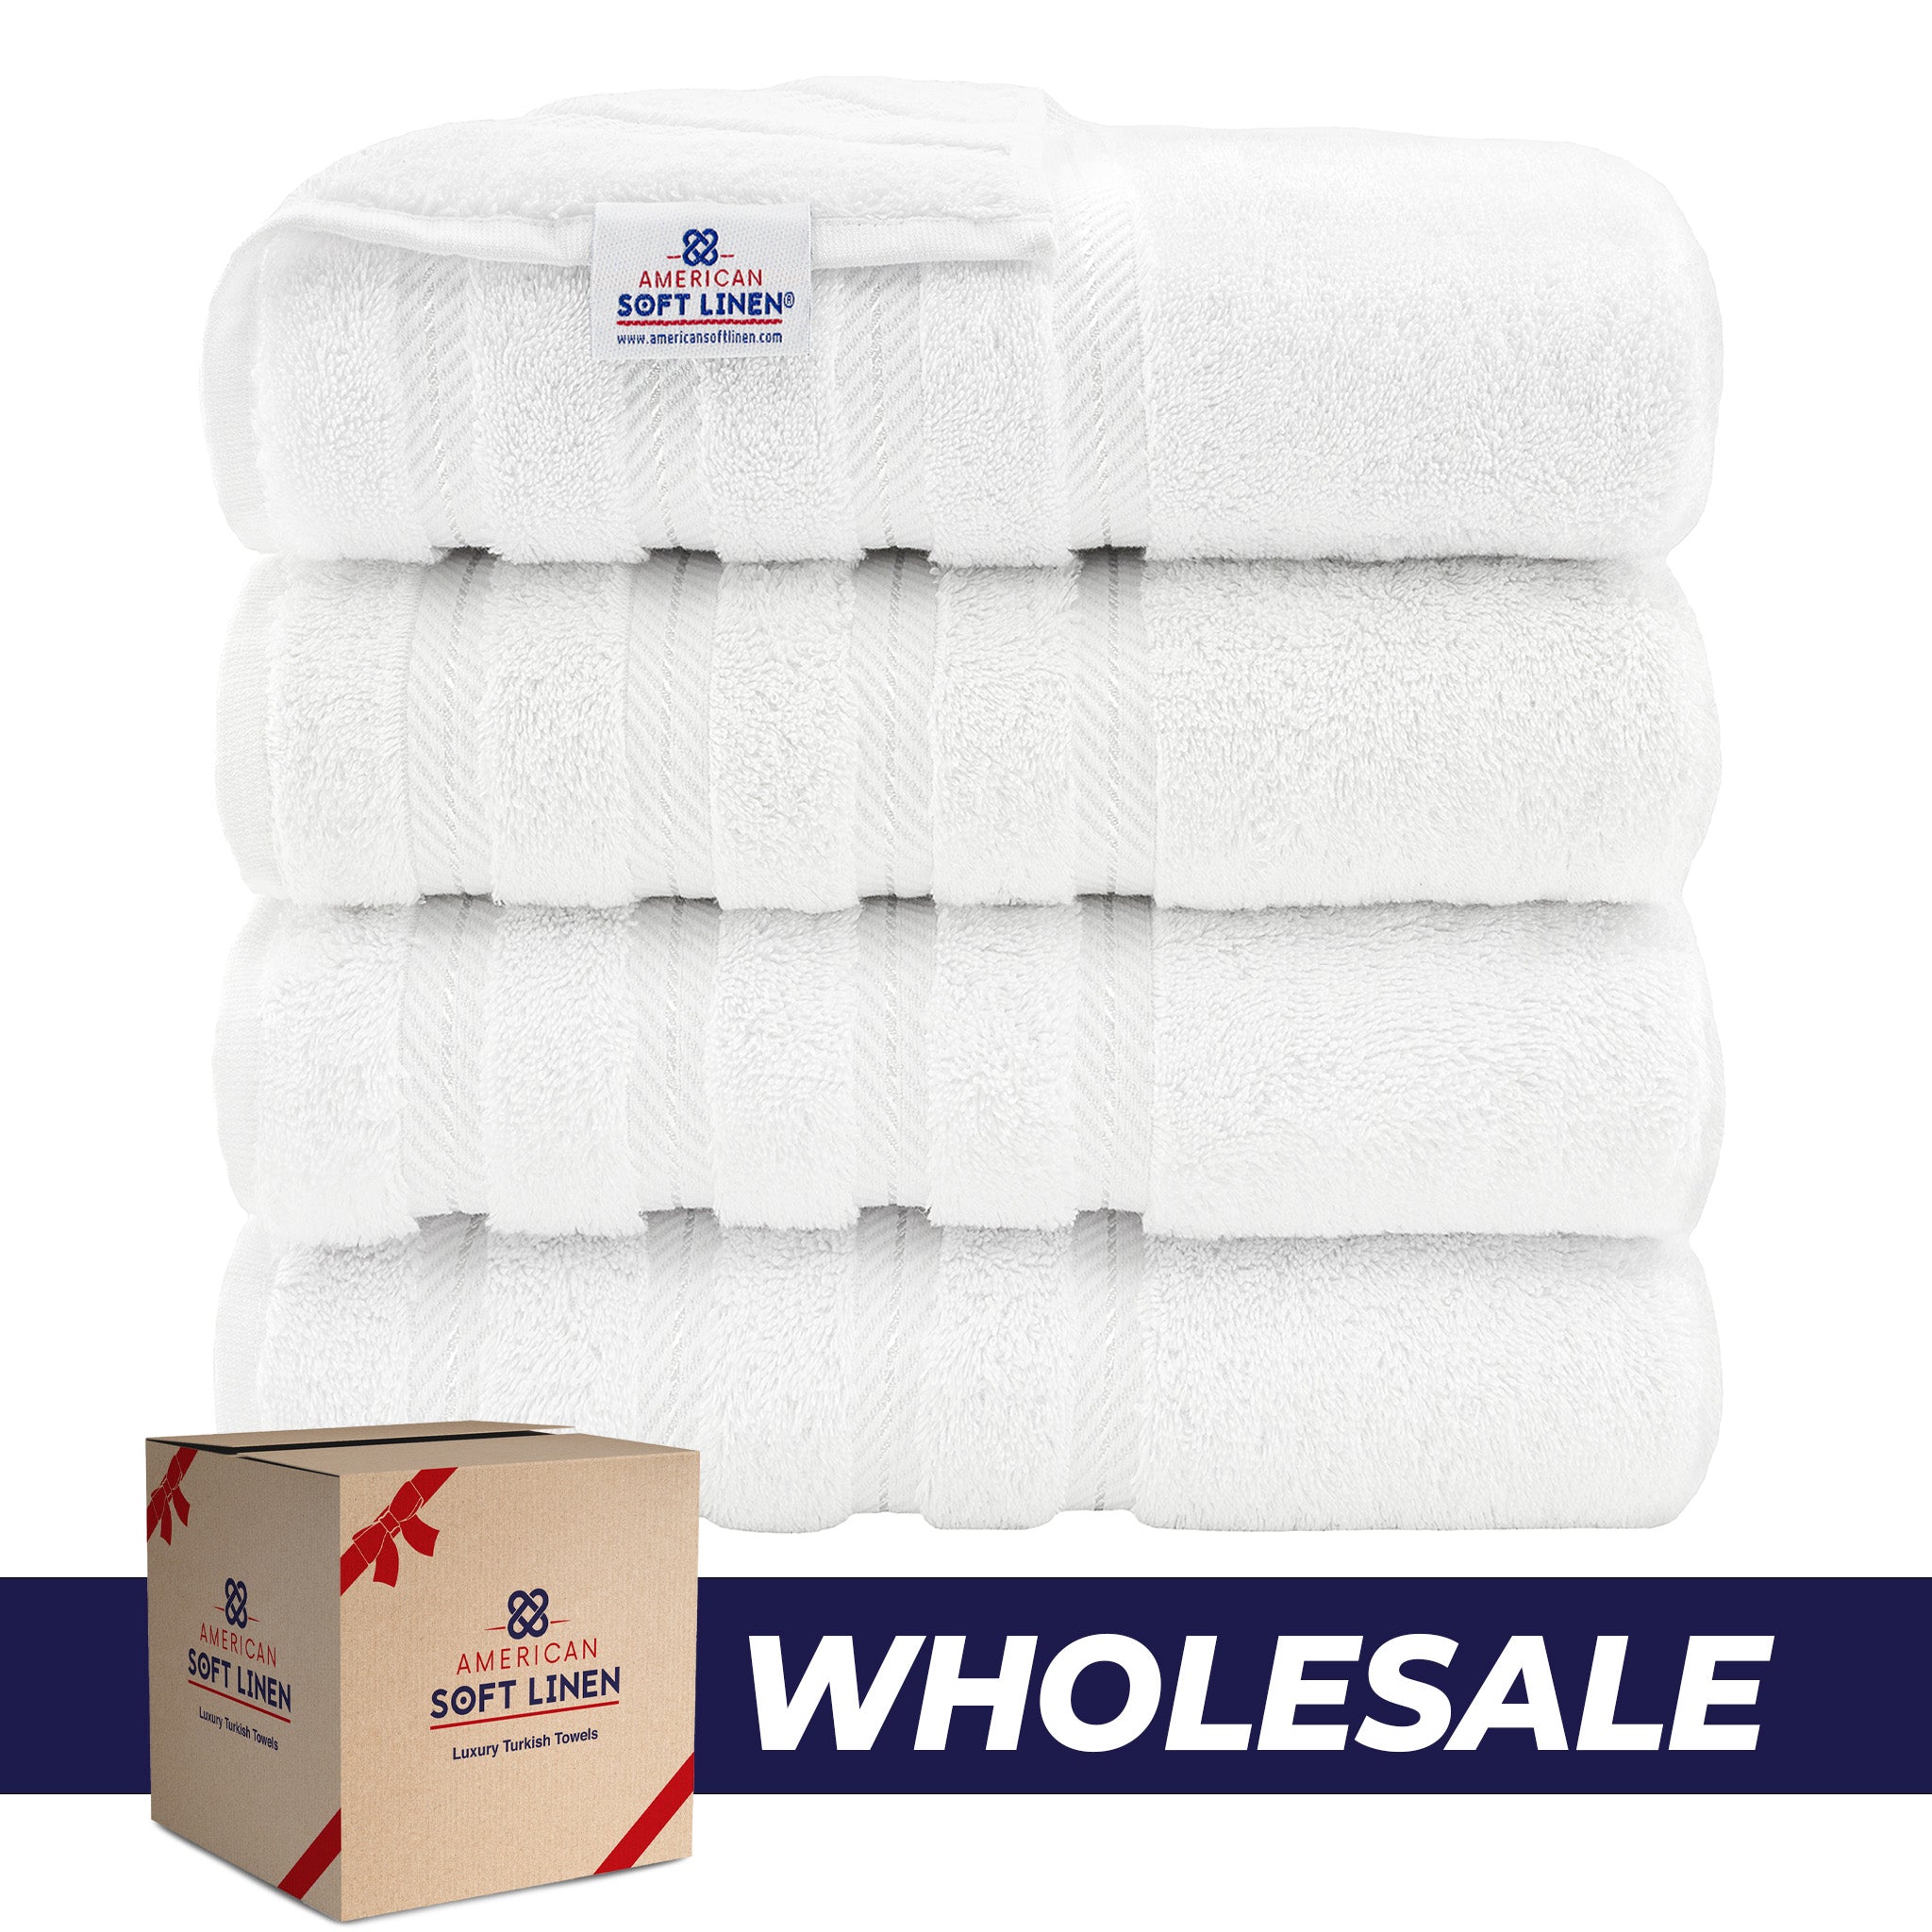 24 Pack Premium Ringspun Cotton Bath Sheets ( 30x60 Inch)